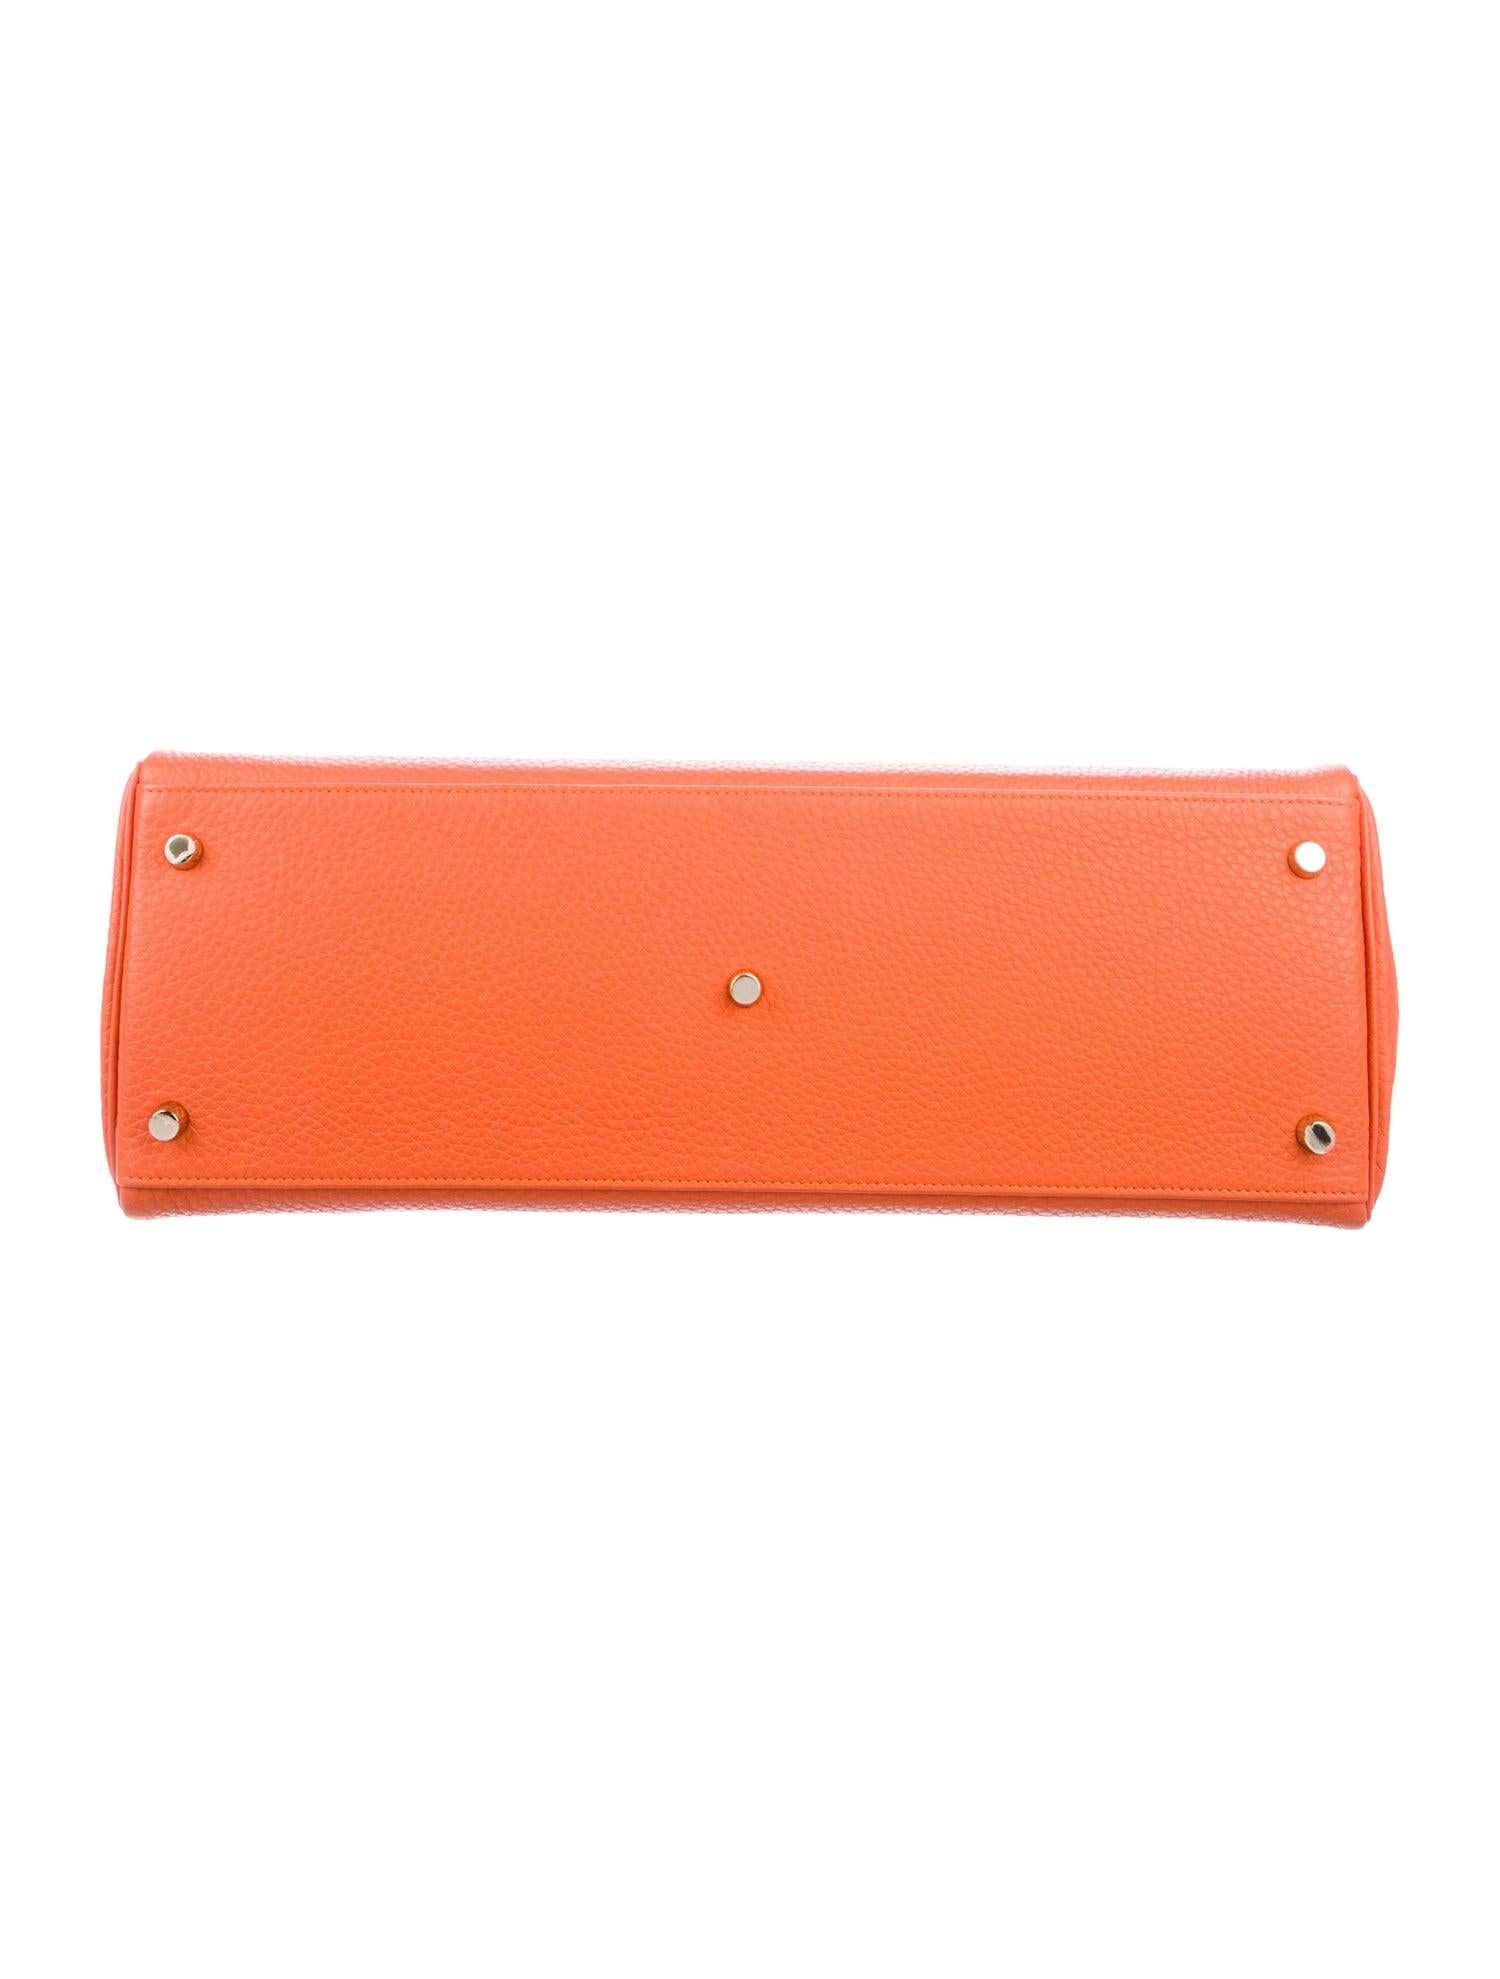 Hermes NEW Kelly Orange Leather Gold JPG Style Top Handle Satchel Tote Bag W/Box 1